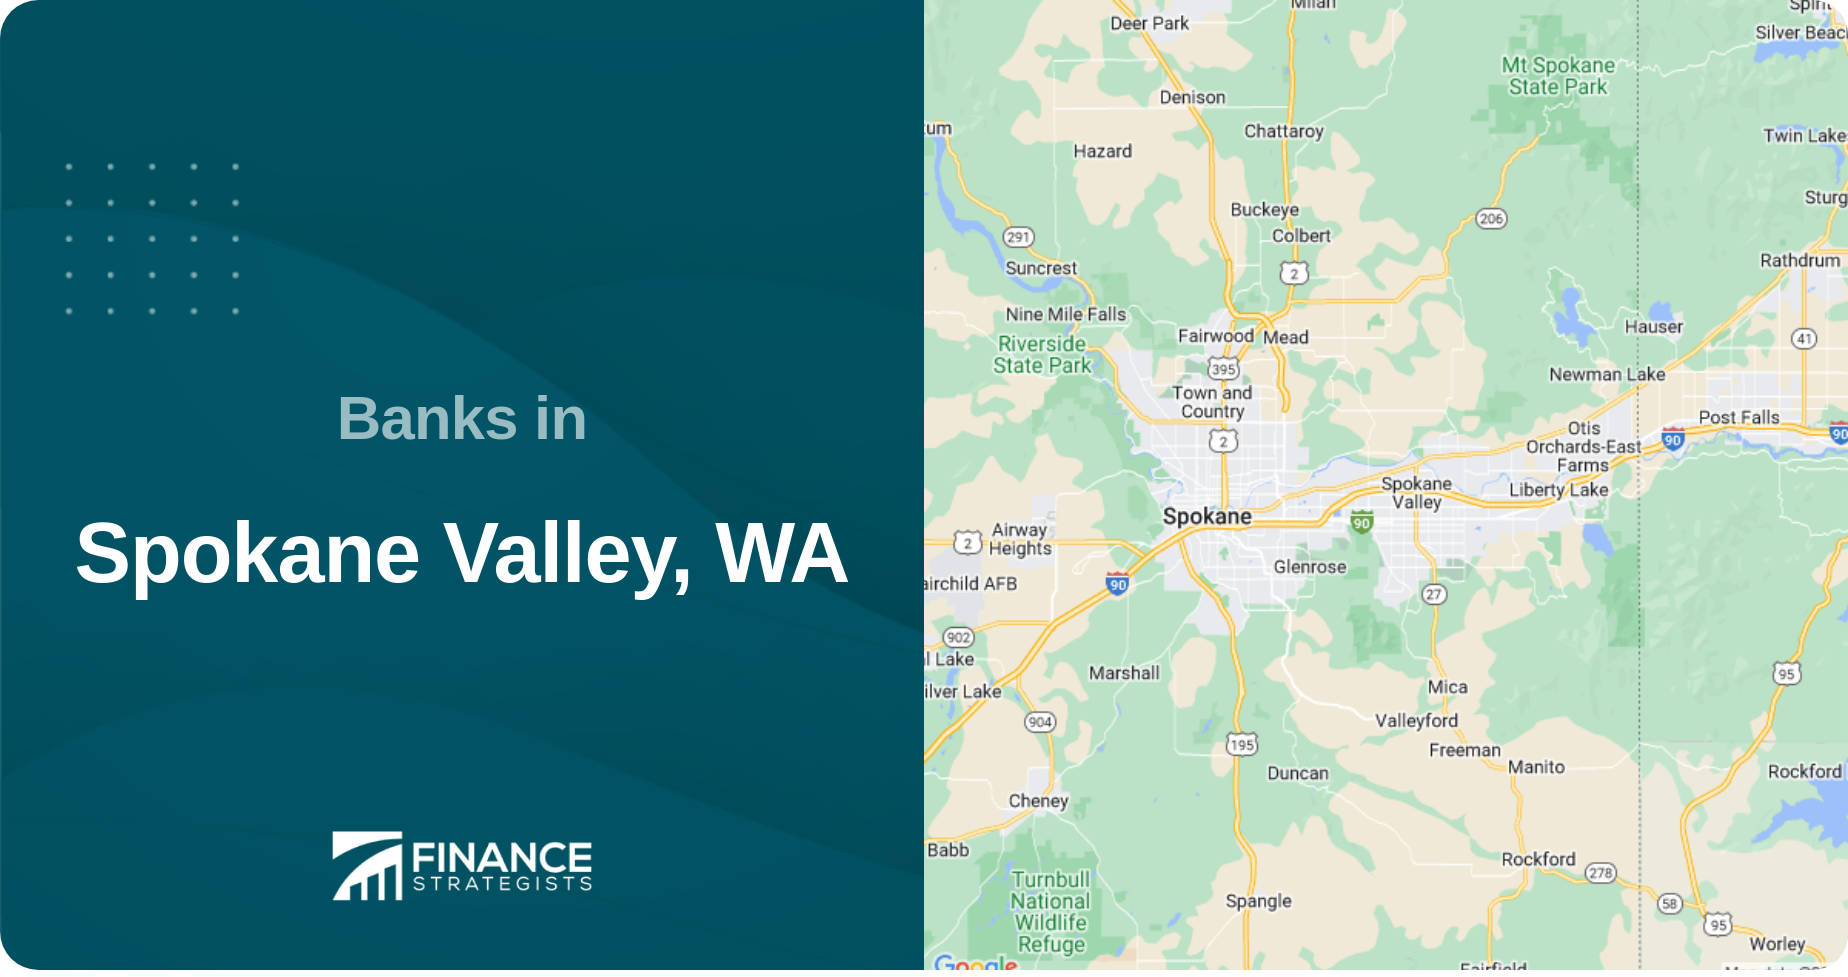 Banks in Spokane Valley, WA